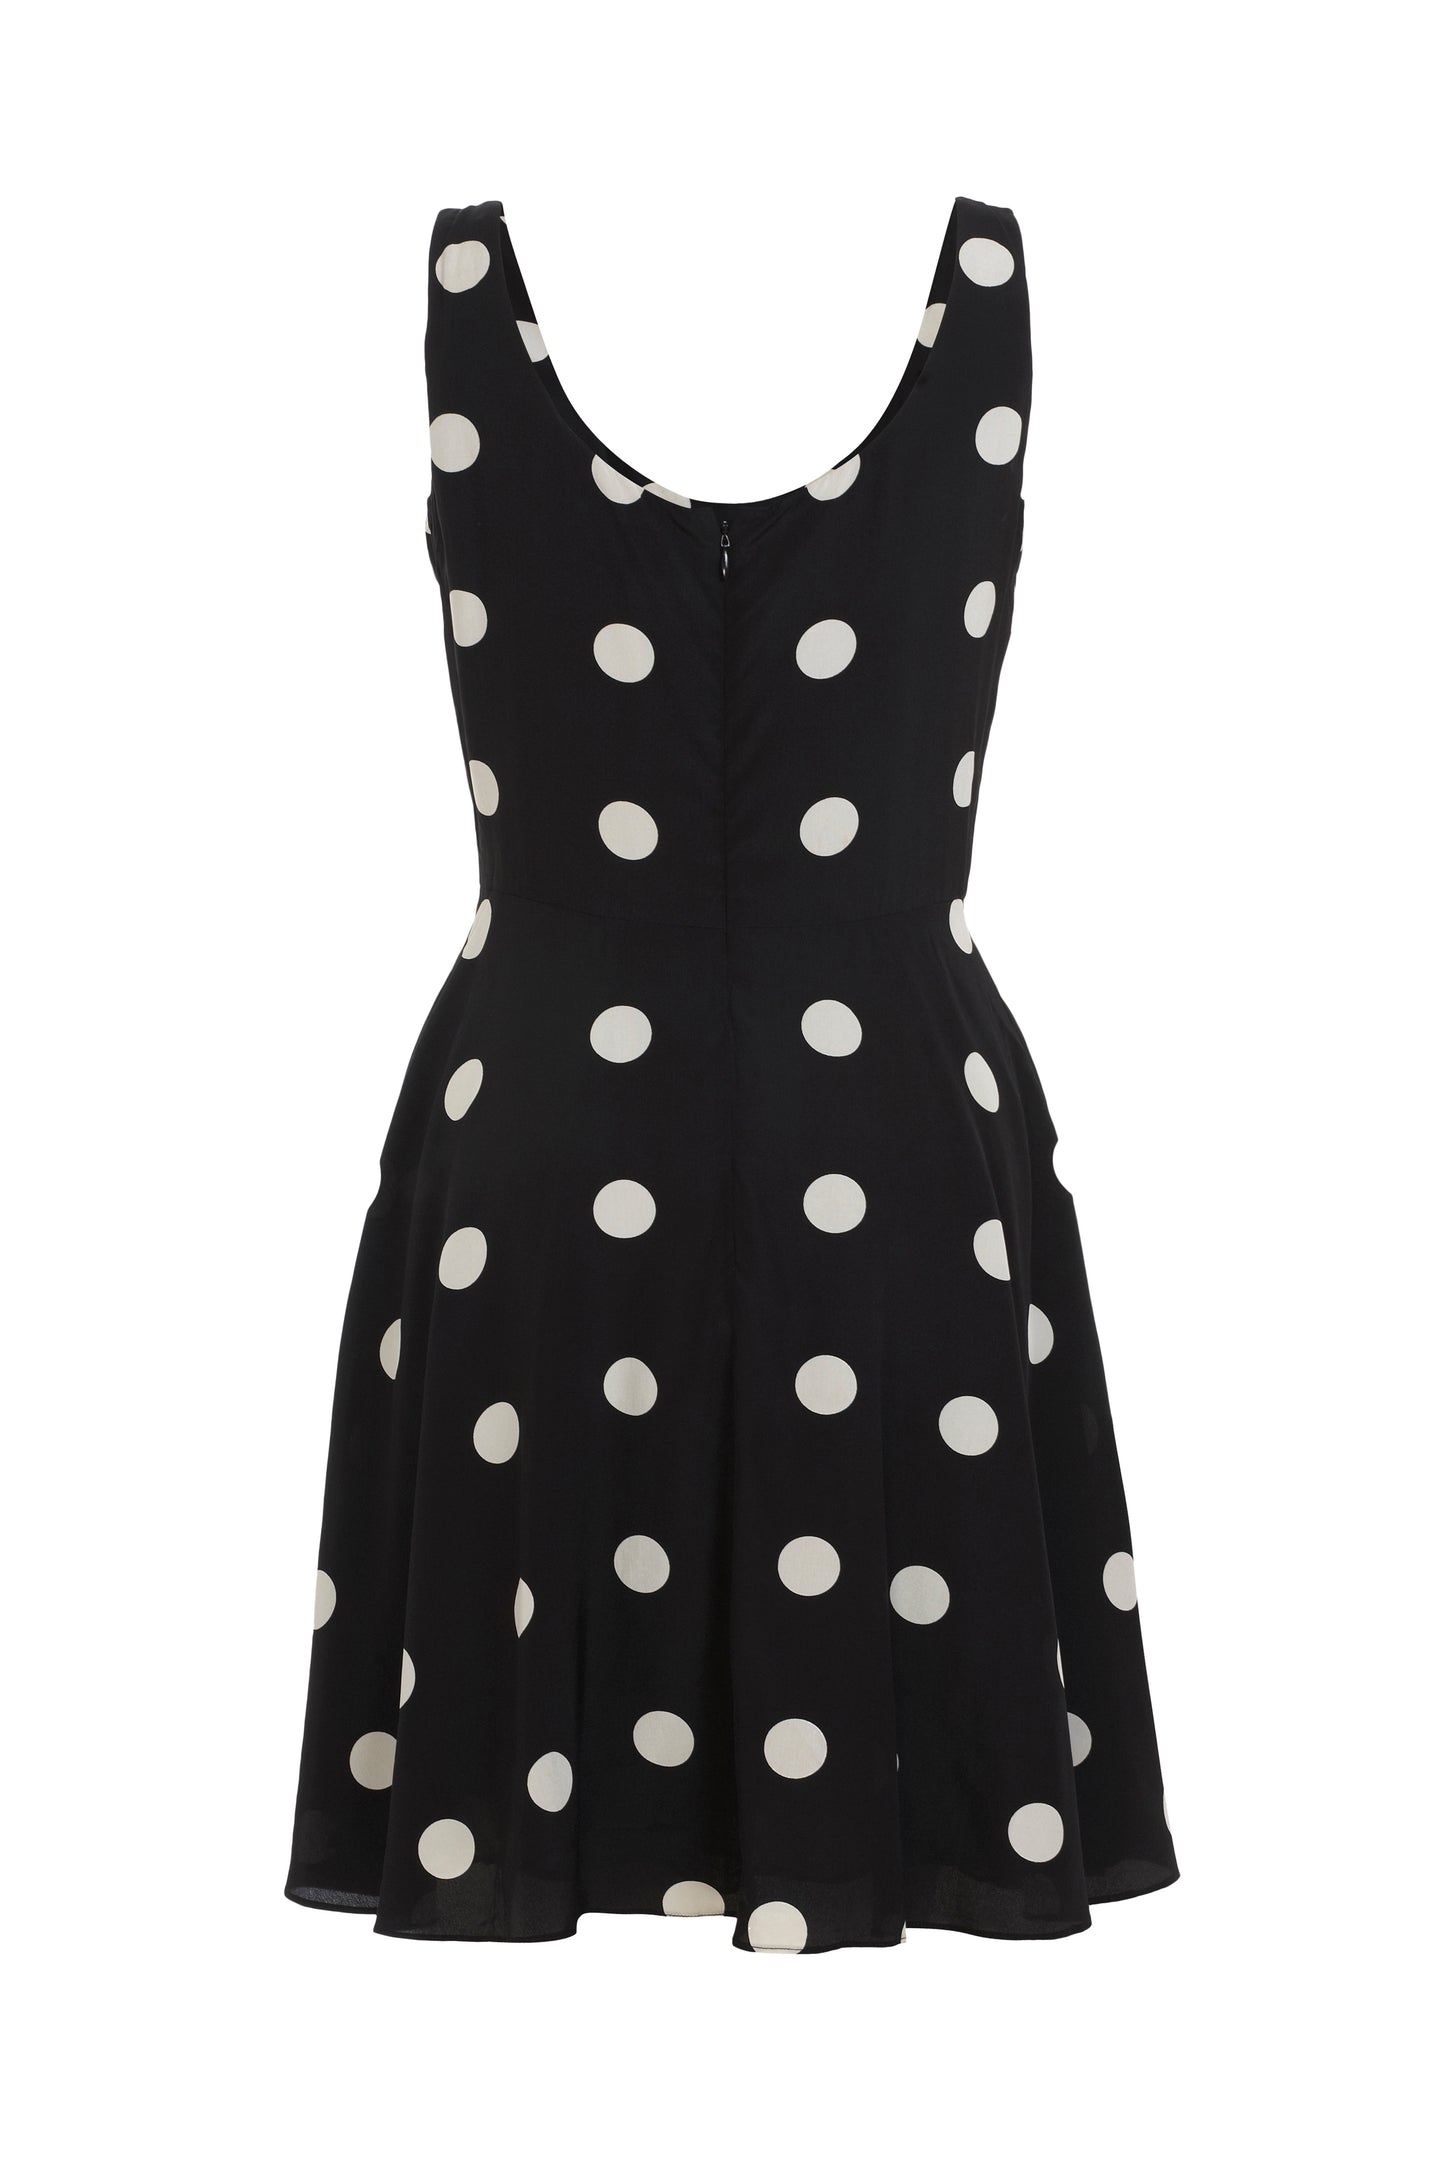 Ralph Lauren Collection black sleeveless silk dress with white polka dots